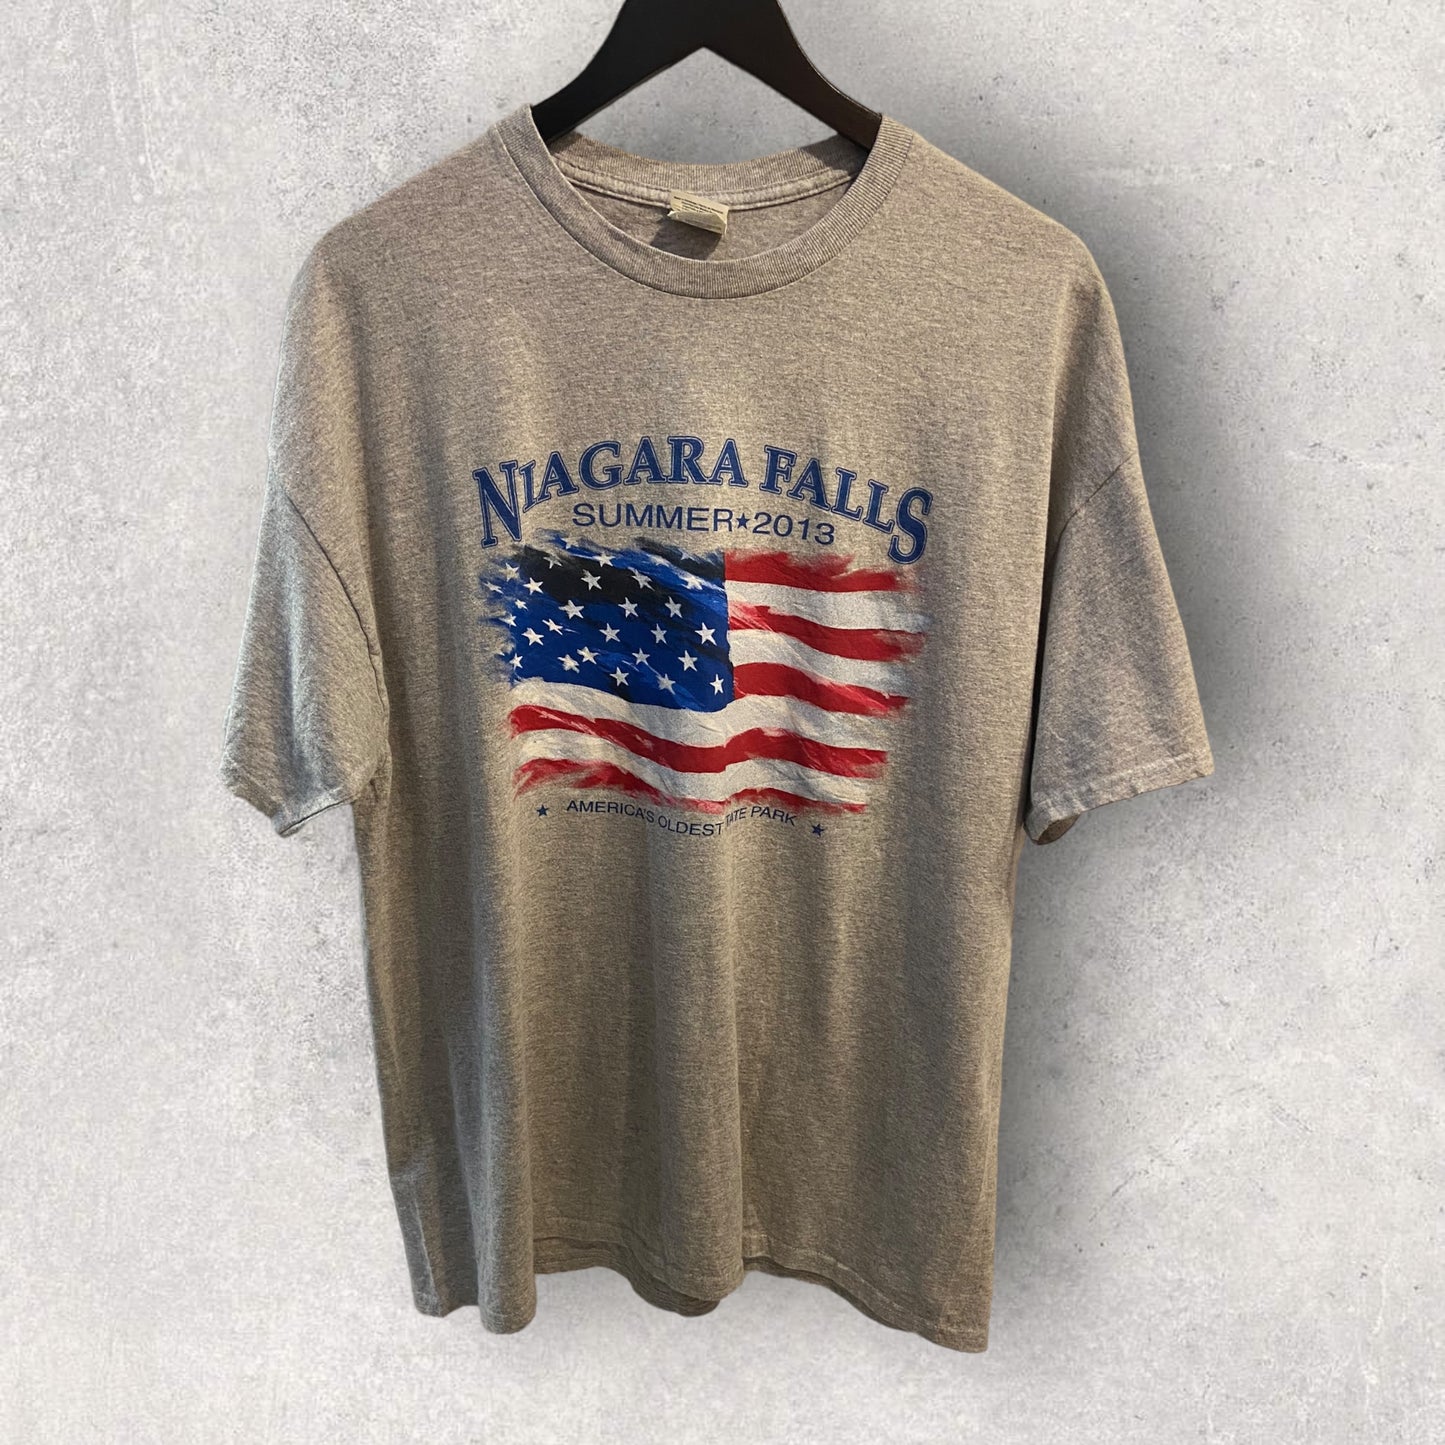 Niagara Falls T-Shirt (XL)